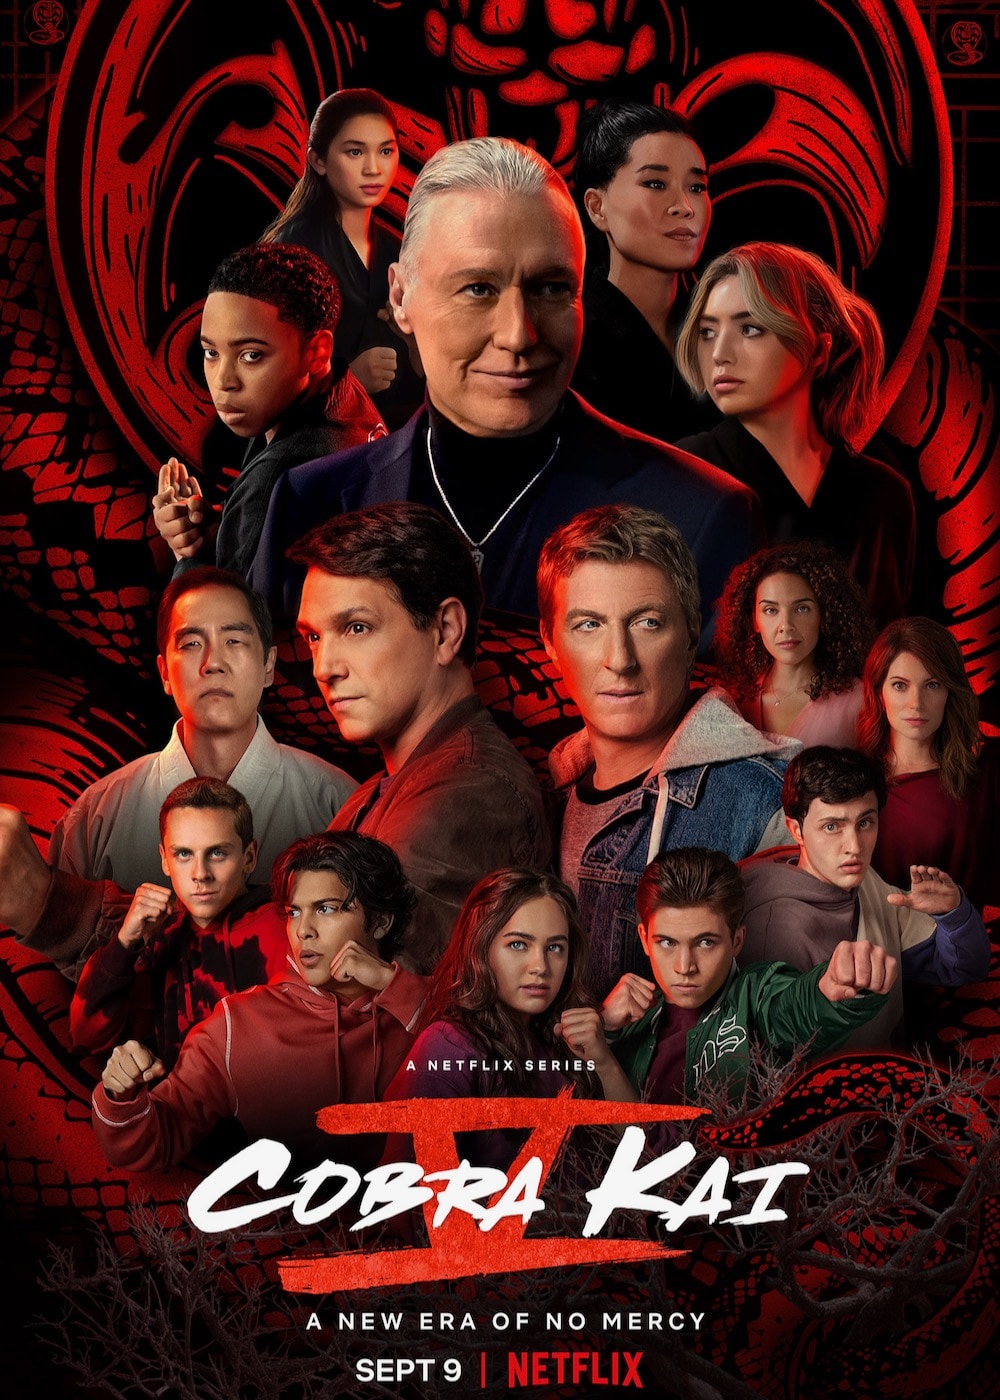 Cobra Kai - Get your Netflix avatar ready for Season 4. Who are